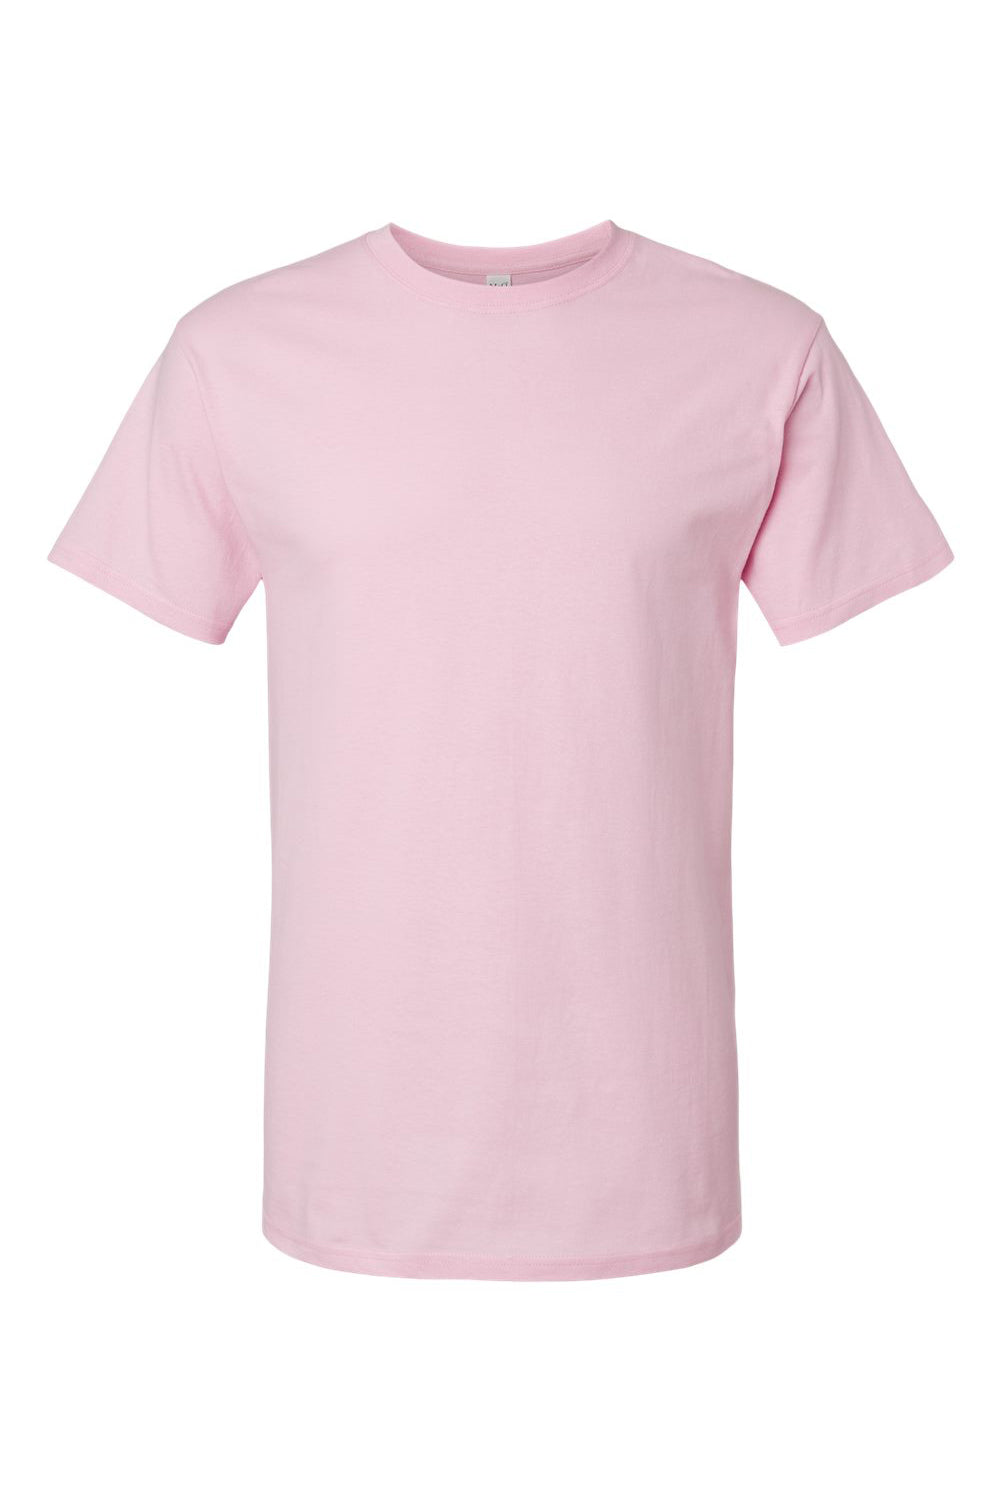 M&O 4800 Mens Gold Soft Touch Short Sleeve Crewneck T-Shirt Light Pink Flat Front